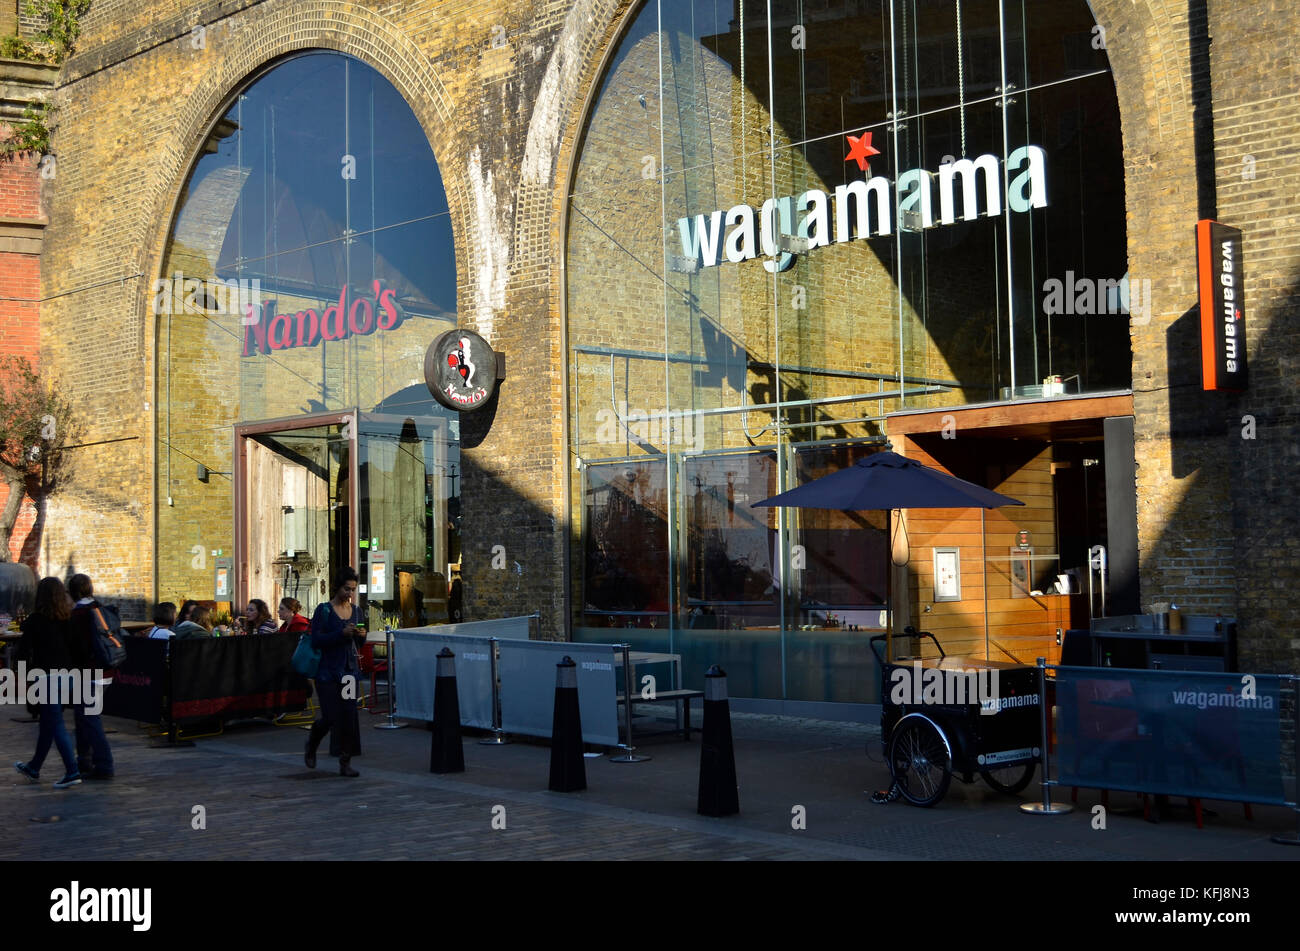 Nando's and Wagamama restaurants, Clink Street railway arches, London, UK. Stock Photo